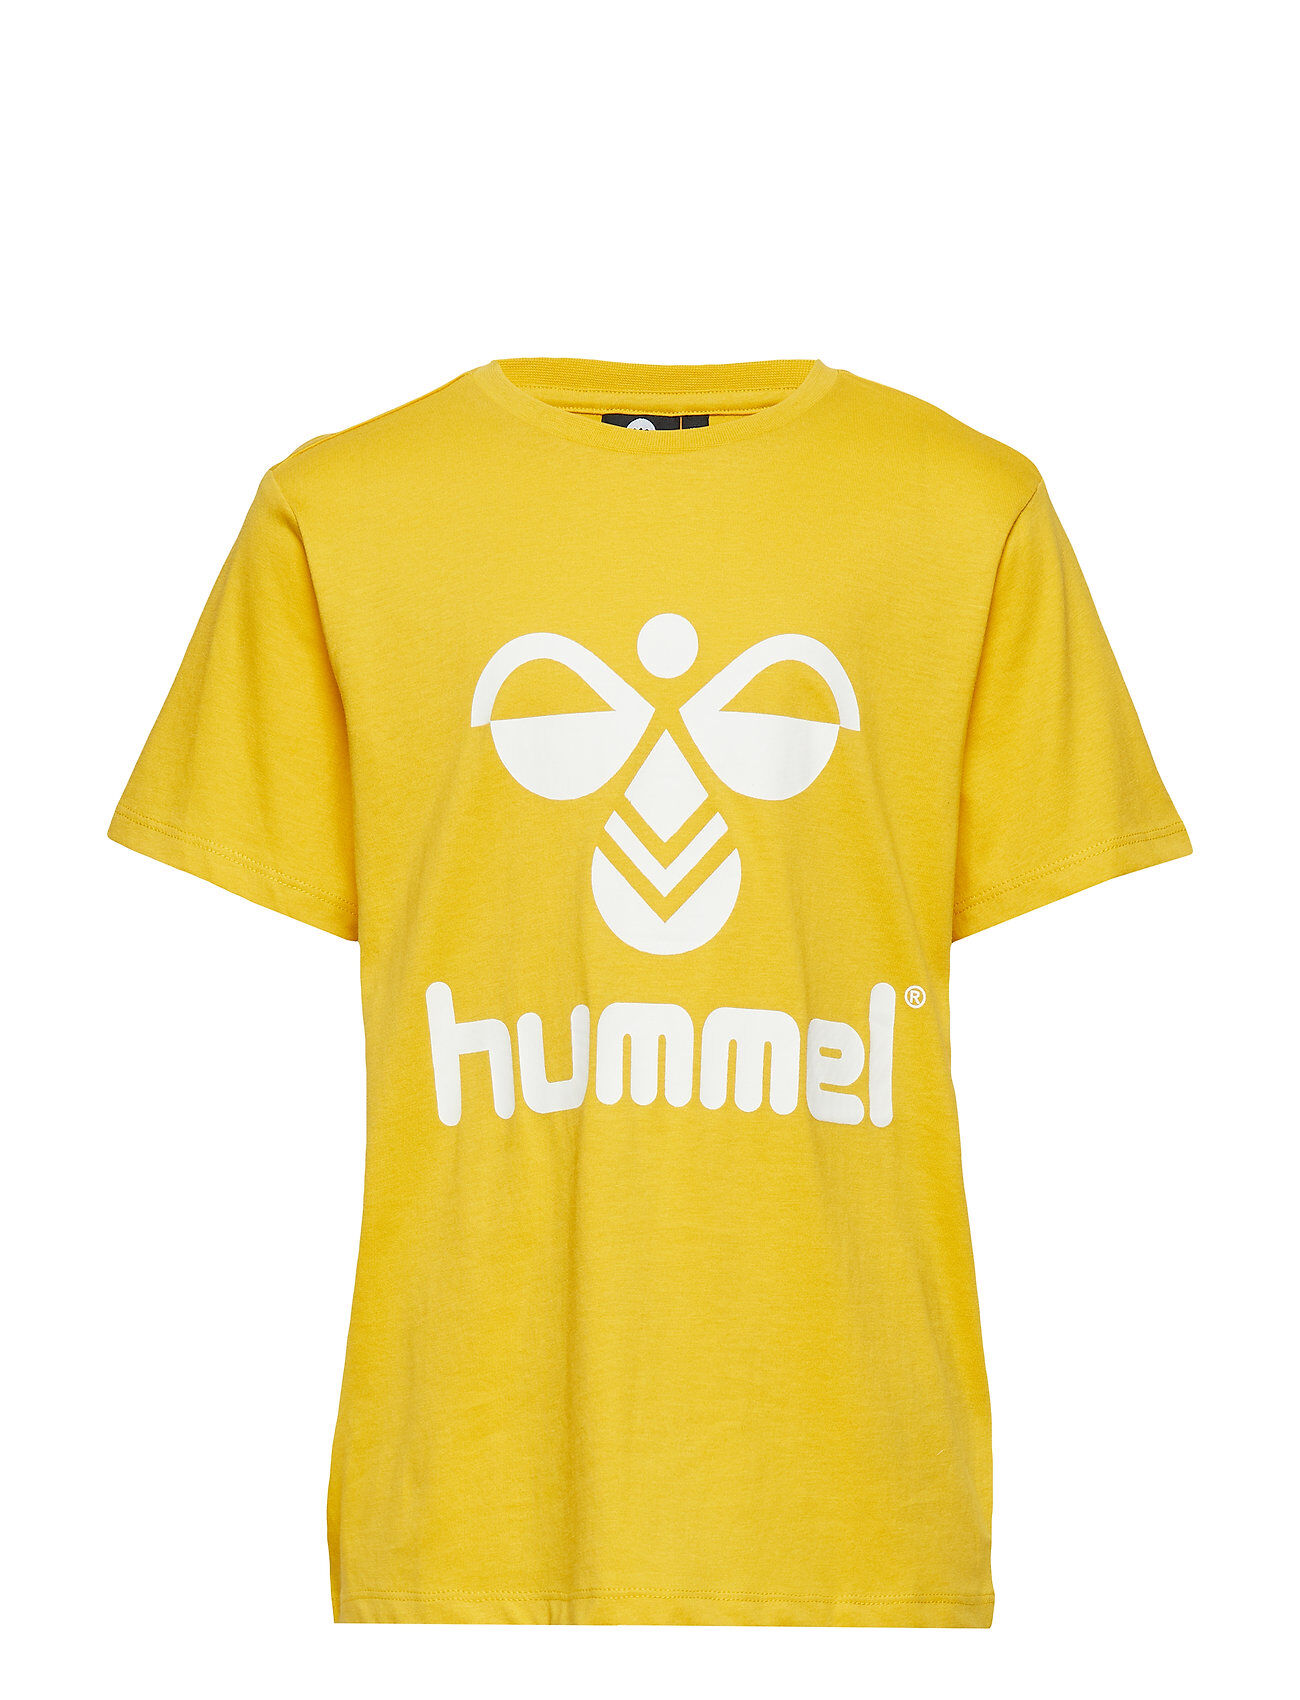 Hummel Hmltres T-Shirt S/S T-shirts Short-sleeved Gul Hummel